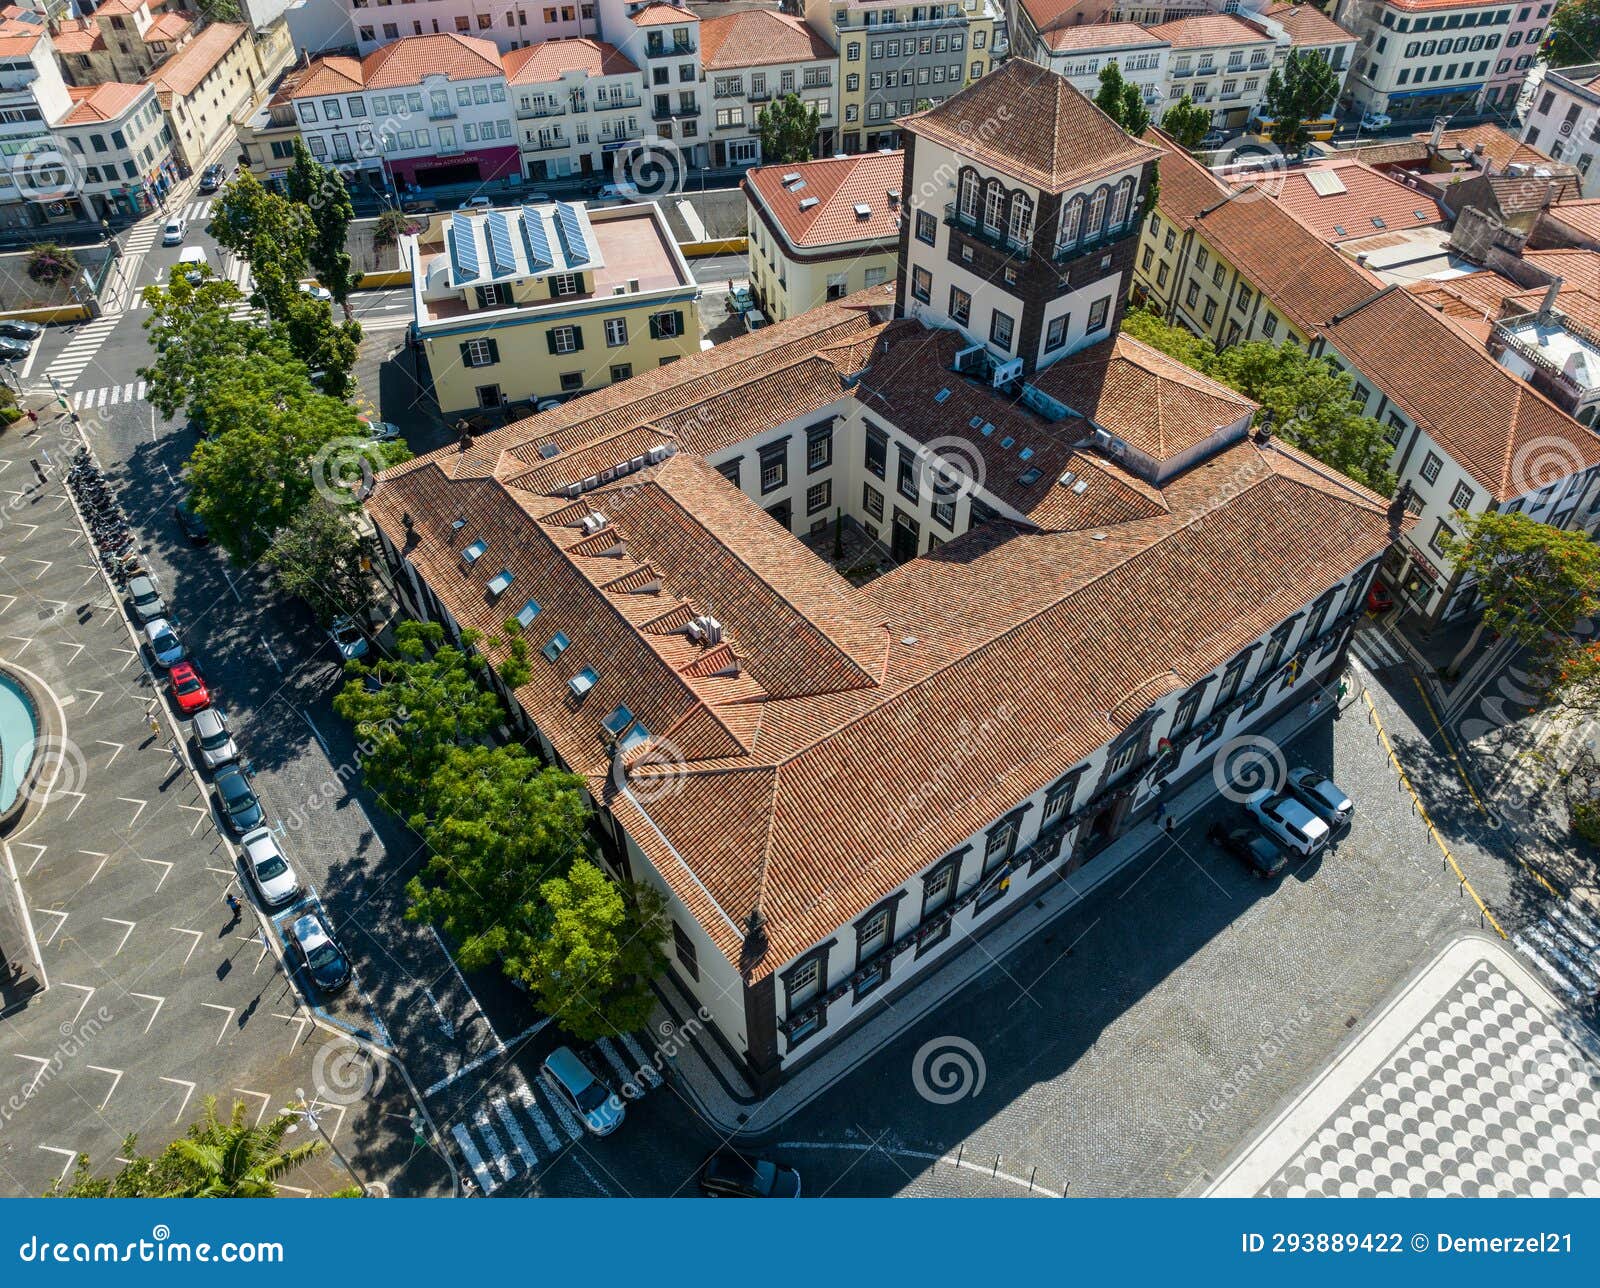 city hall - funchal, portugal